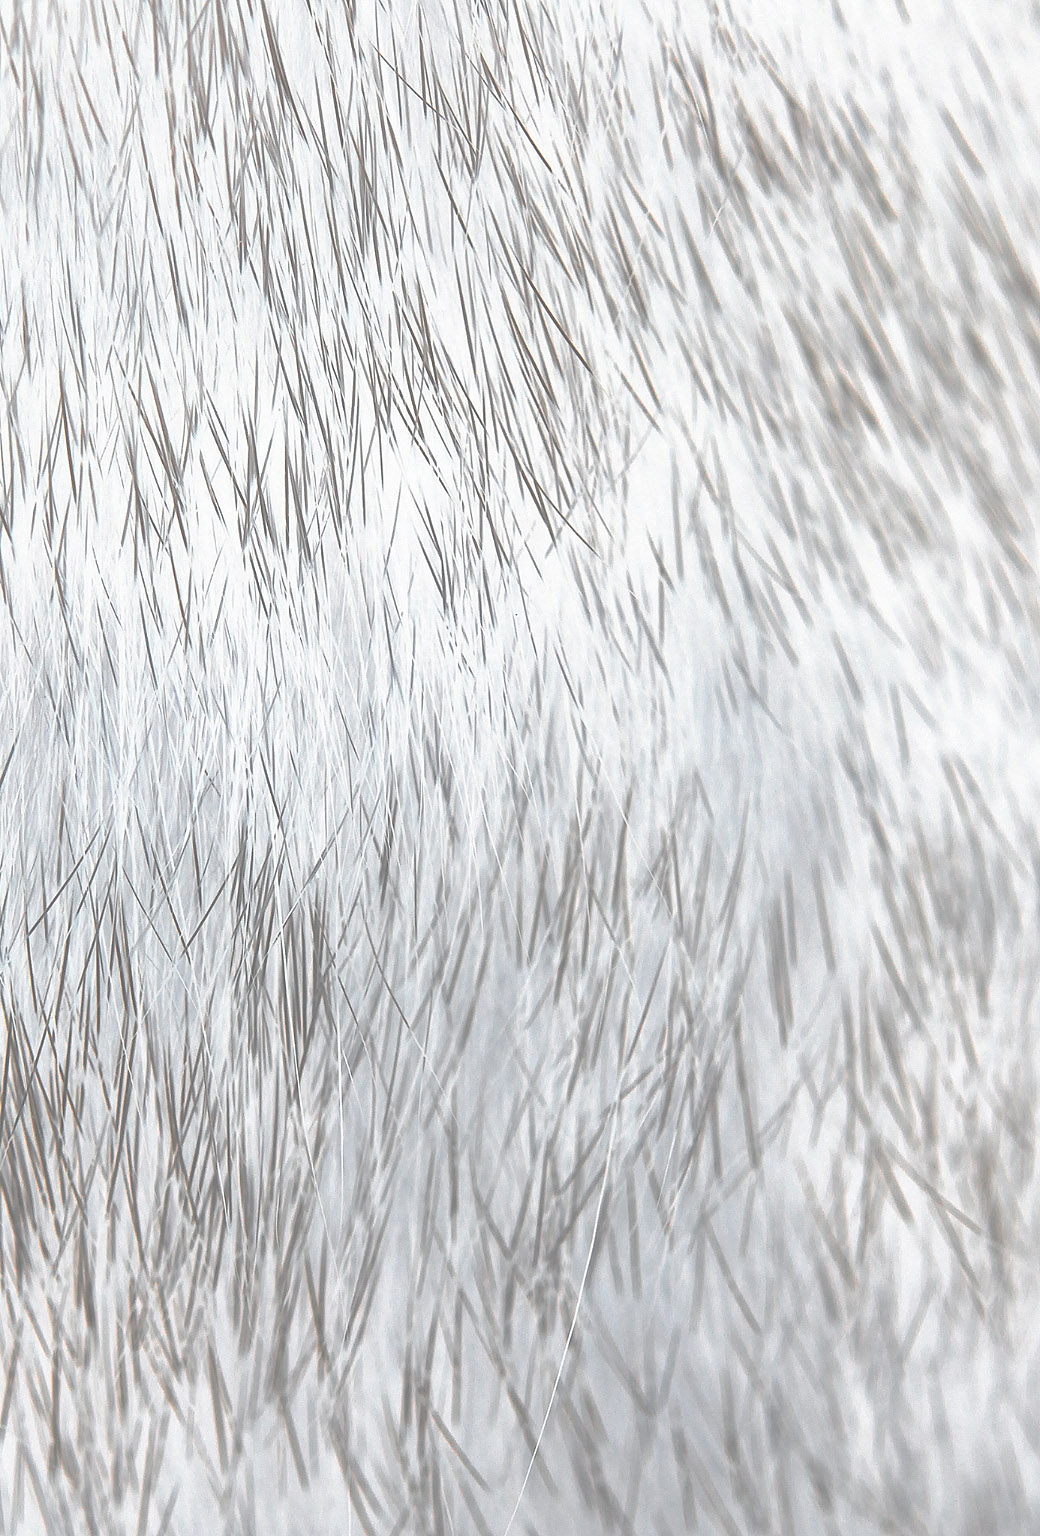 Ios7 Cat Fur Rawrdis White Parallax HD iPhone iPad Wallpaper